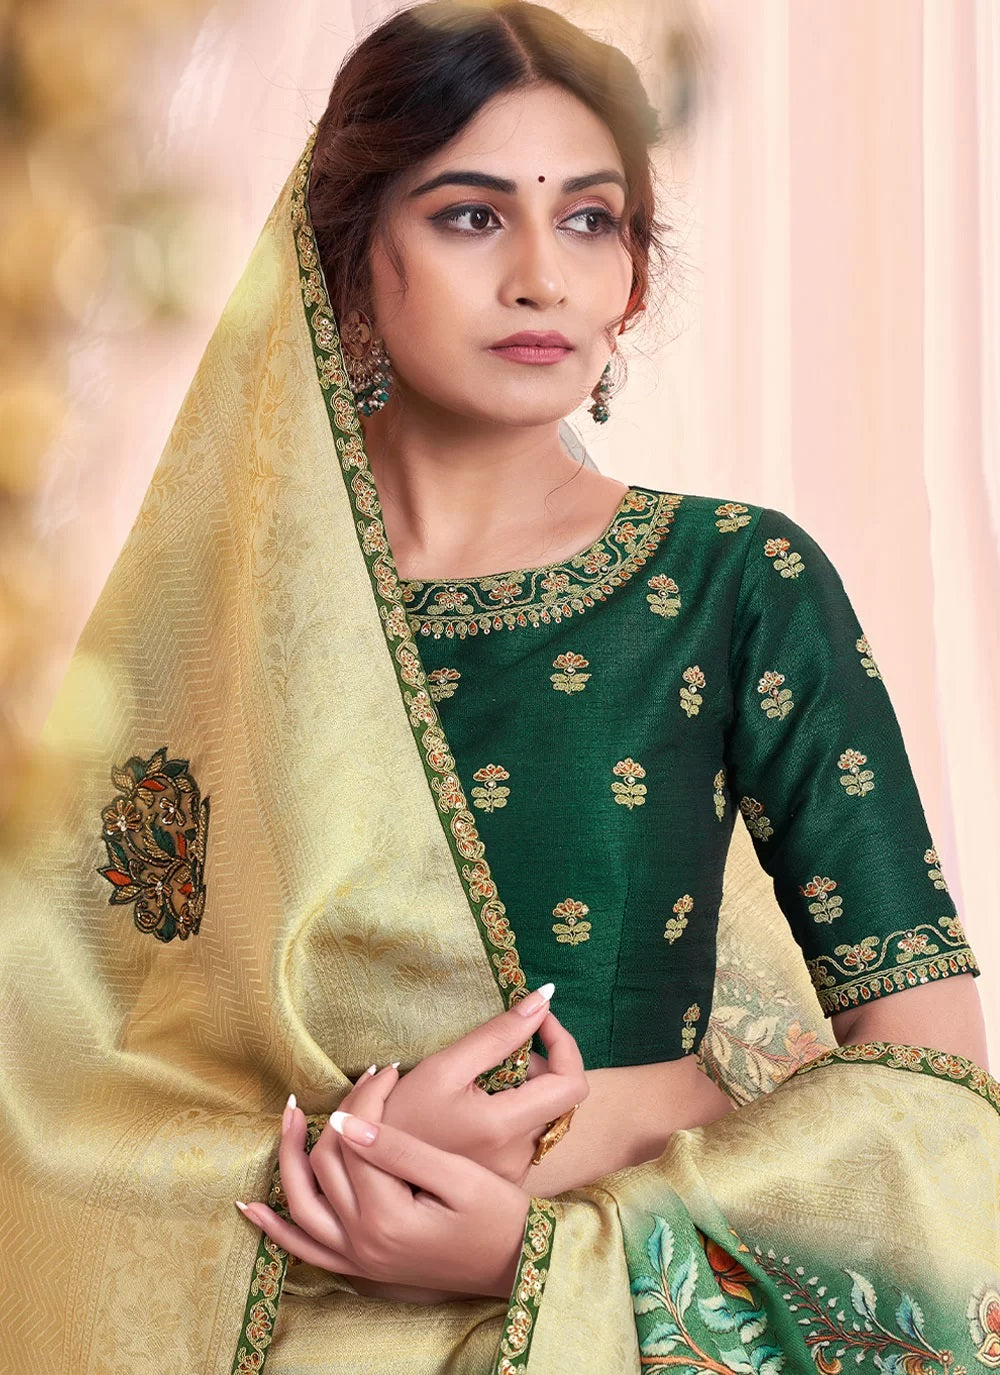 Printed Embroidered Green Wedding Designer Saree